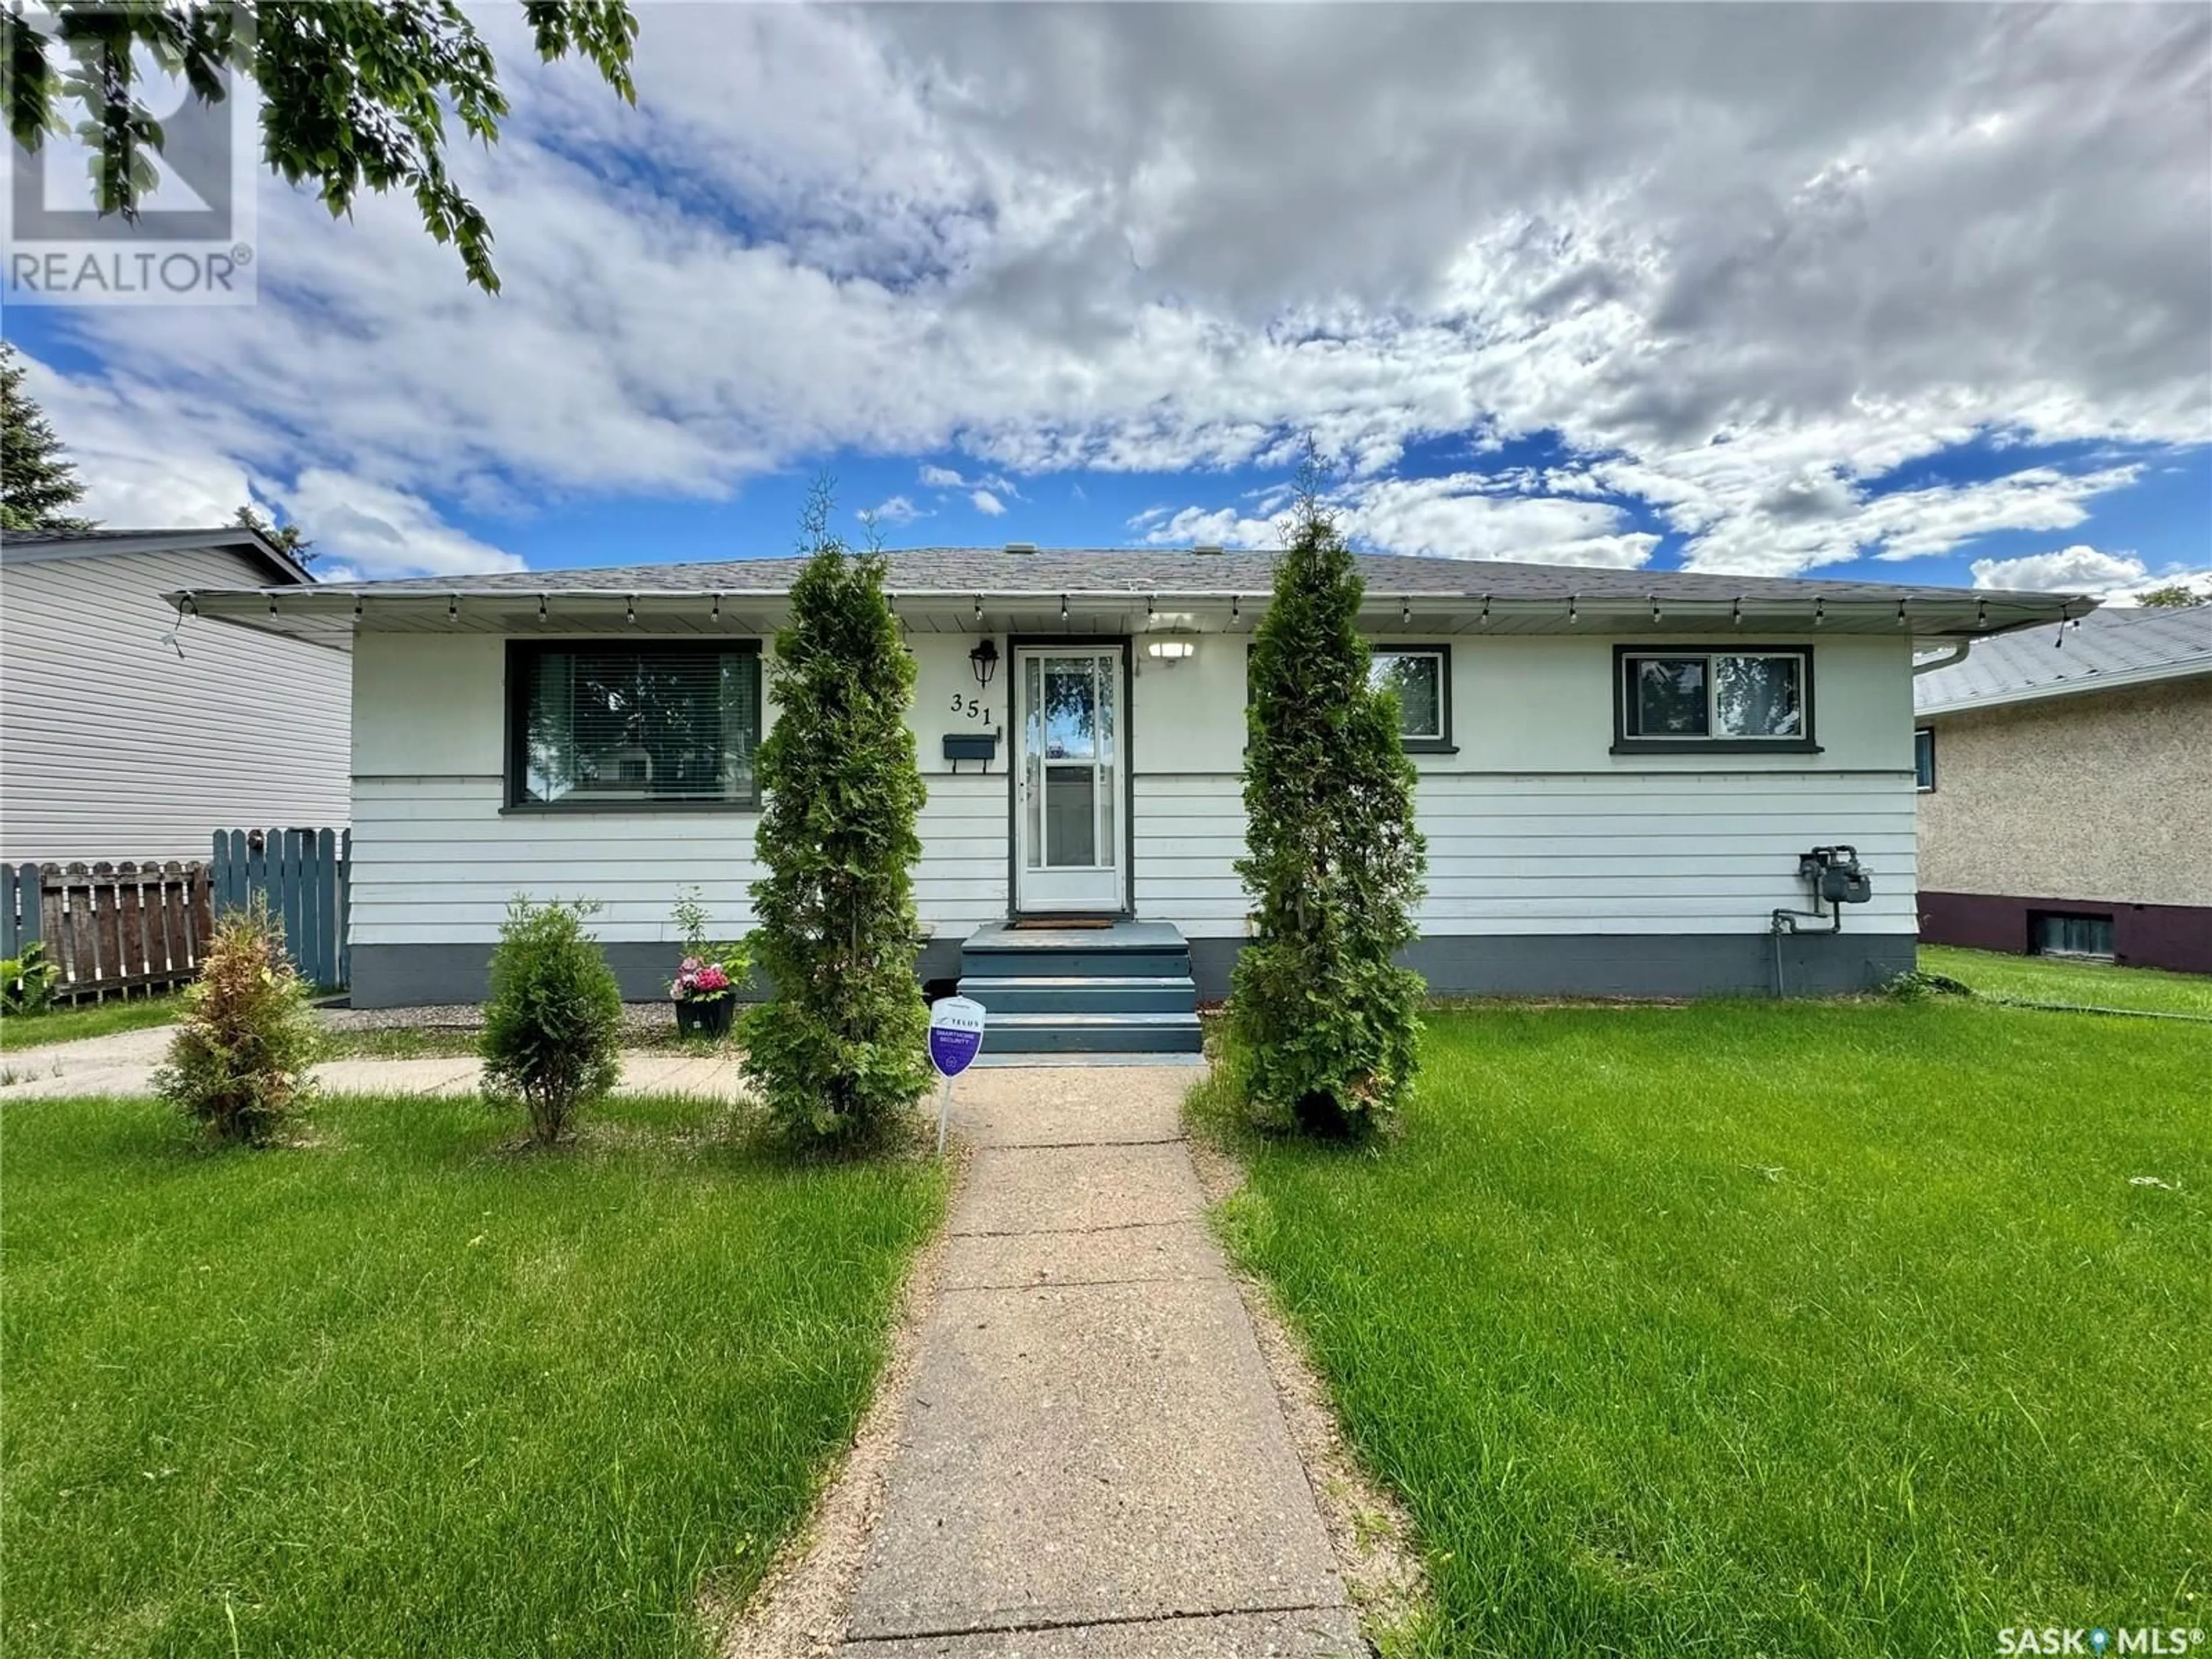 Home with vinyl exterior material for 351 23rd STREET W, Prince Albert Saskatchewan S6V4L9